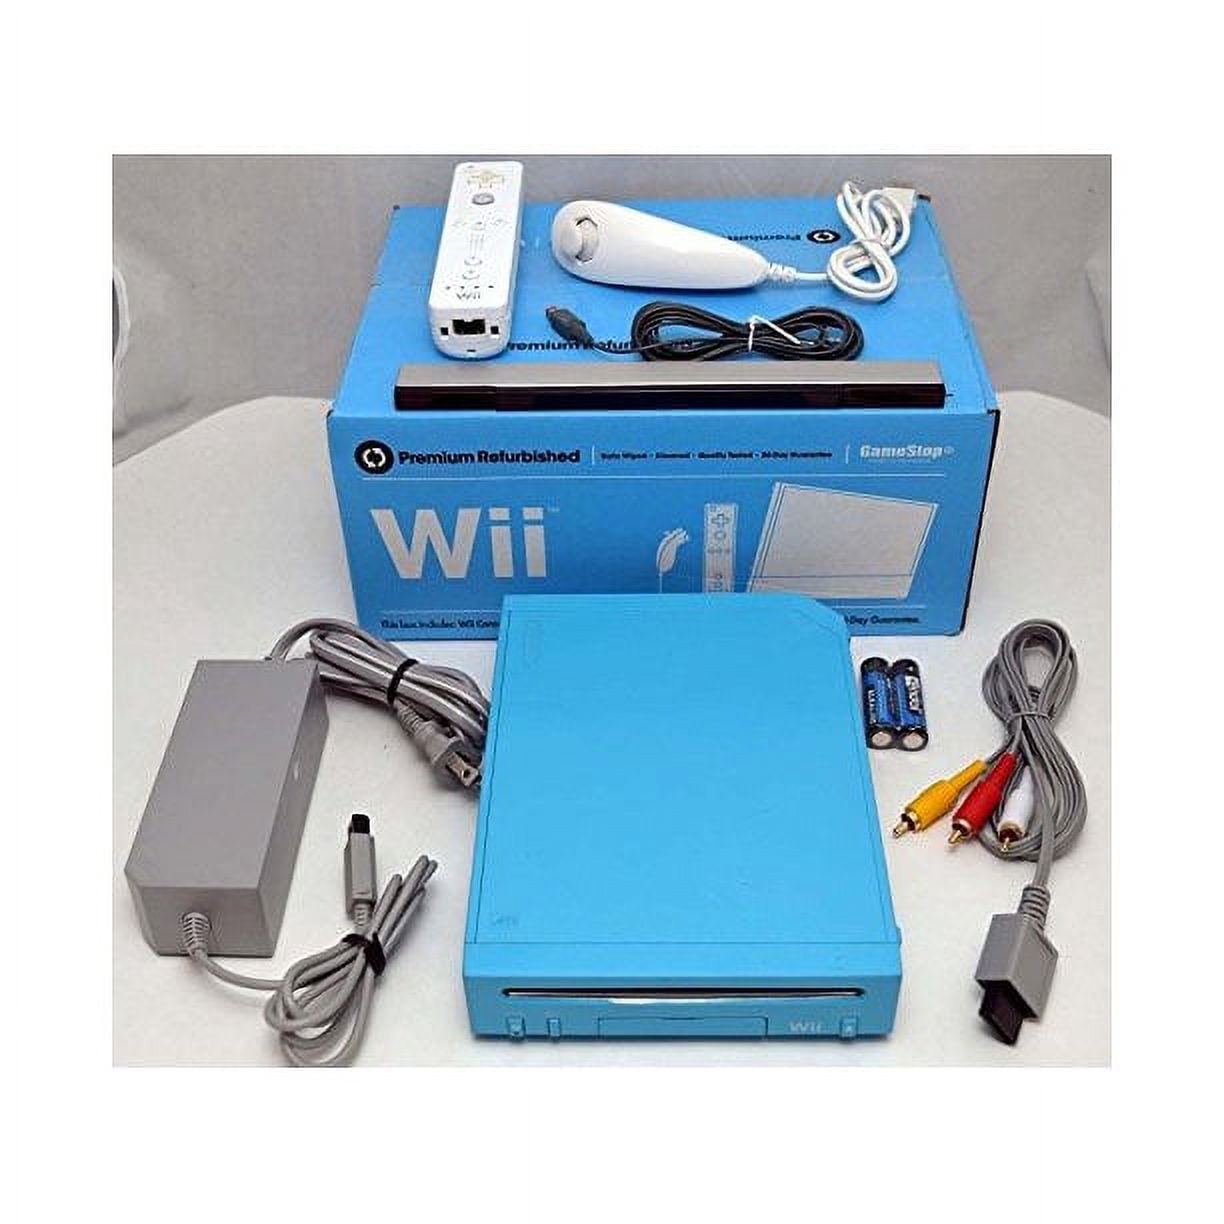 Nintendo Wii Blue Console RVL-101 - Video games & consoles